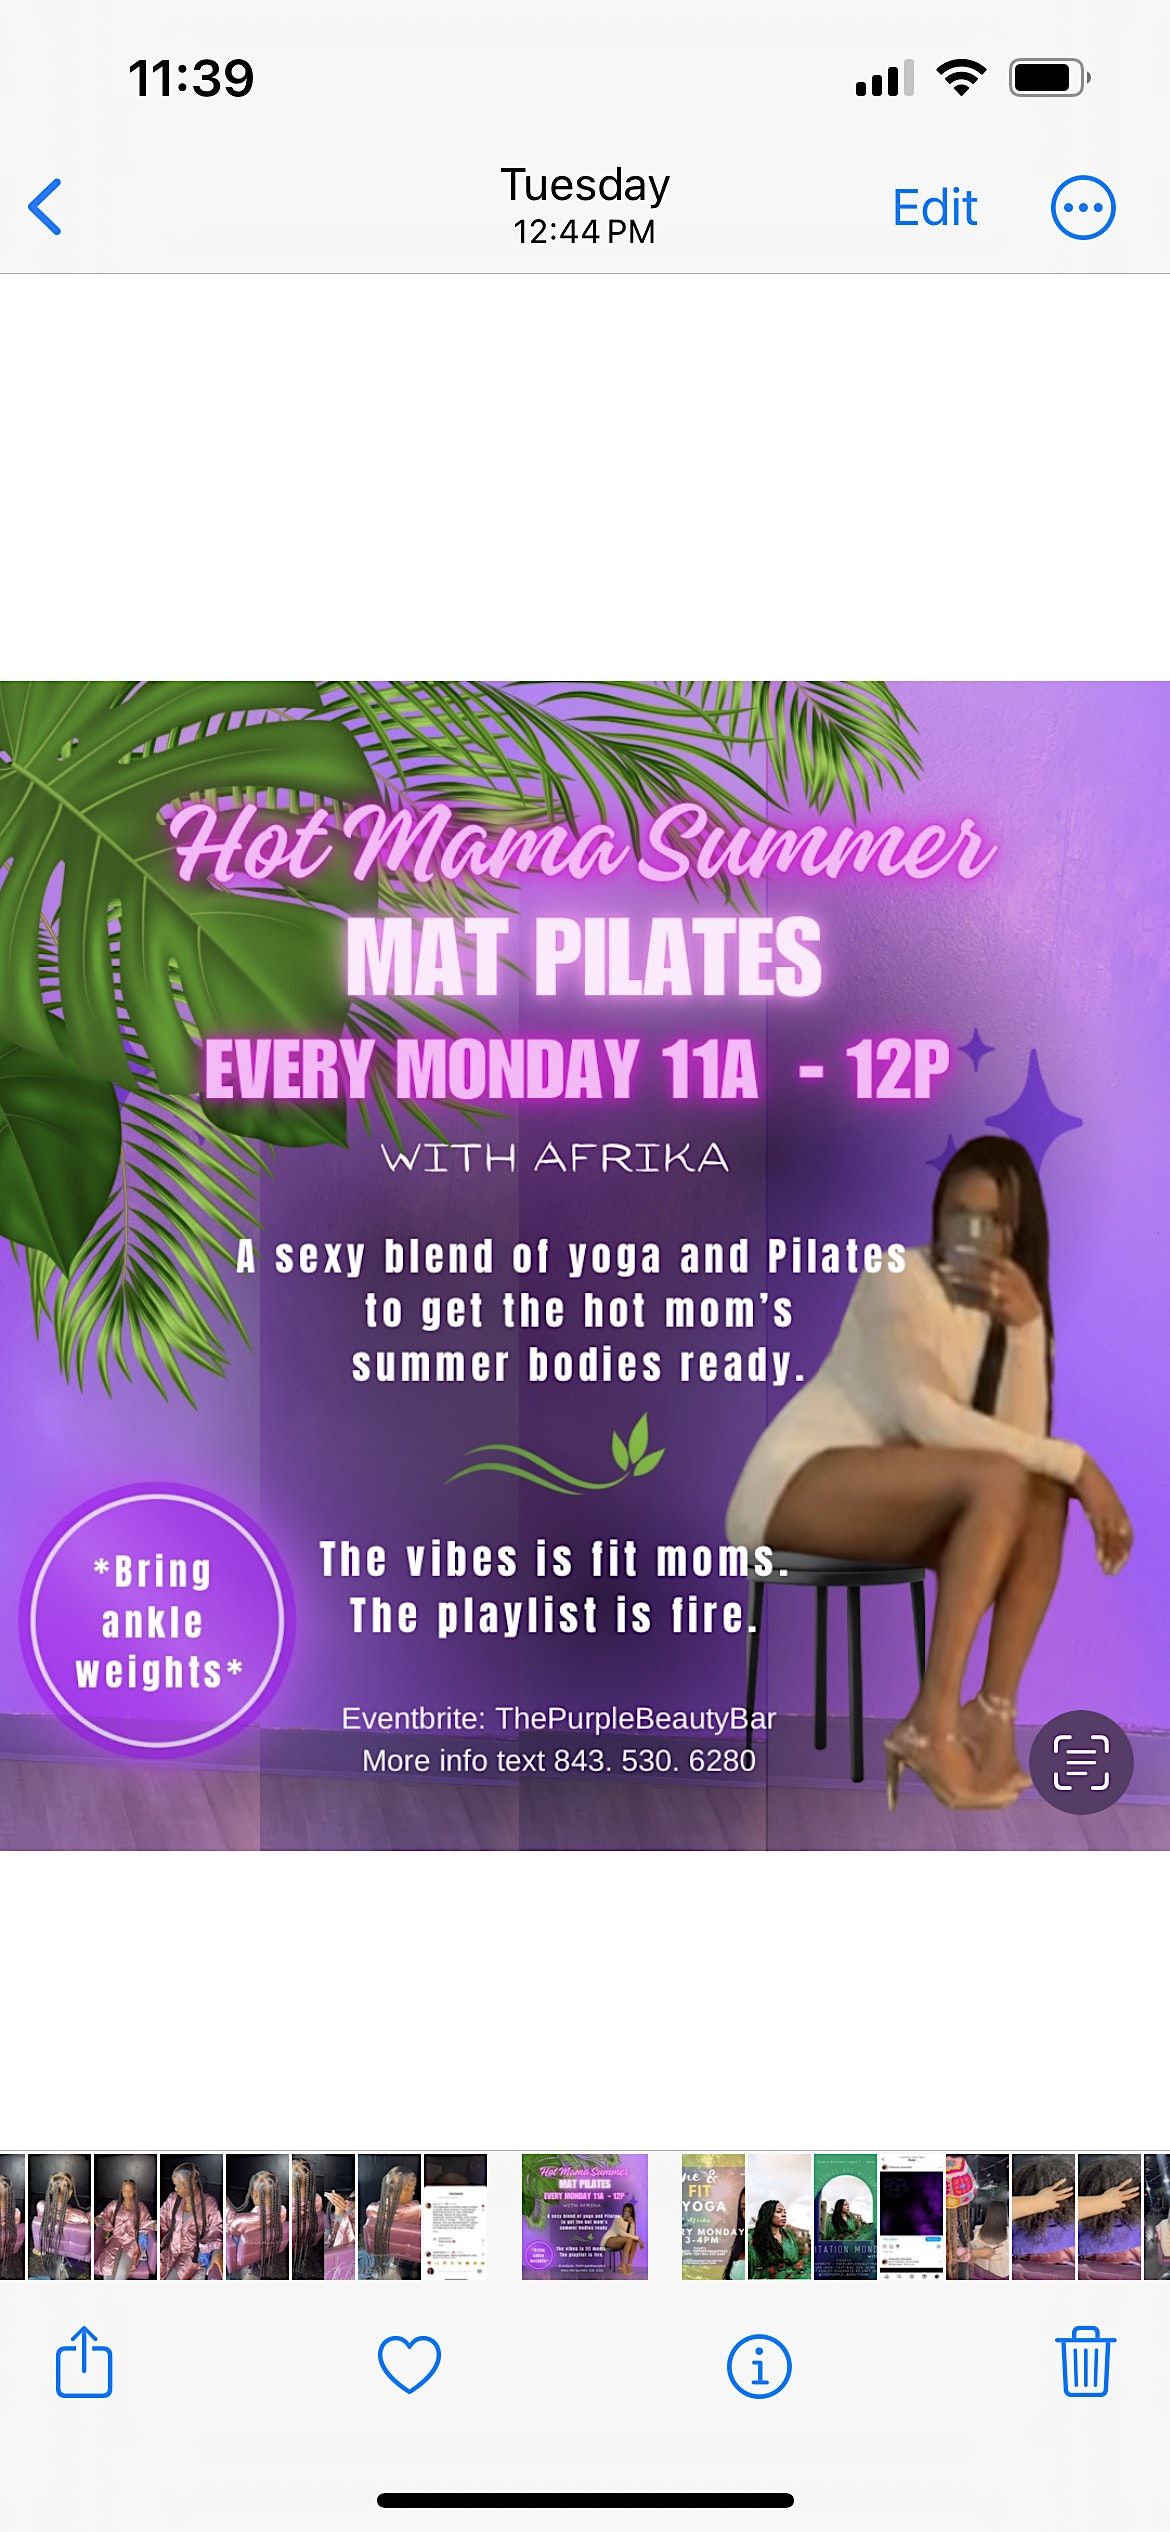 Hot Mama Summer- Mat Pilates